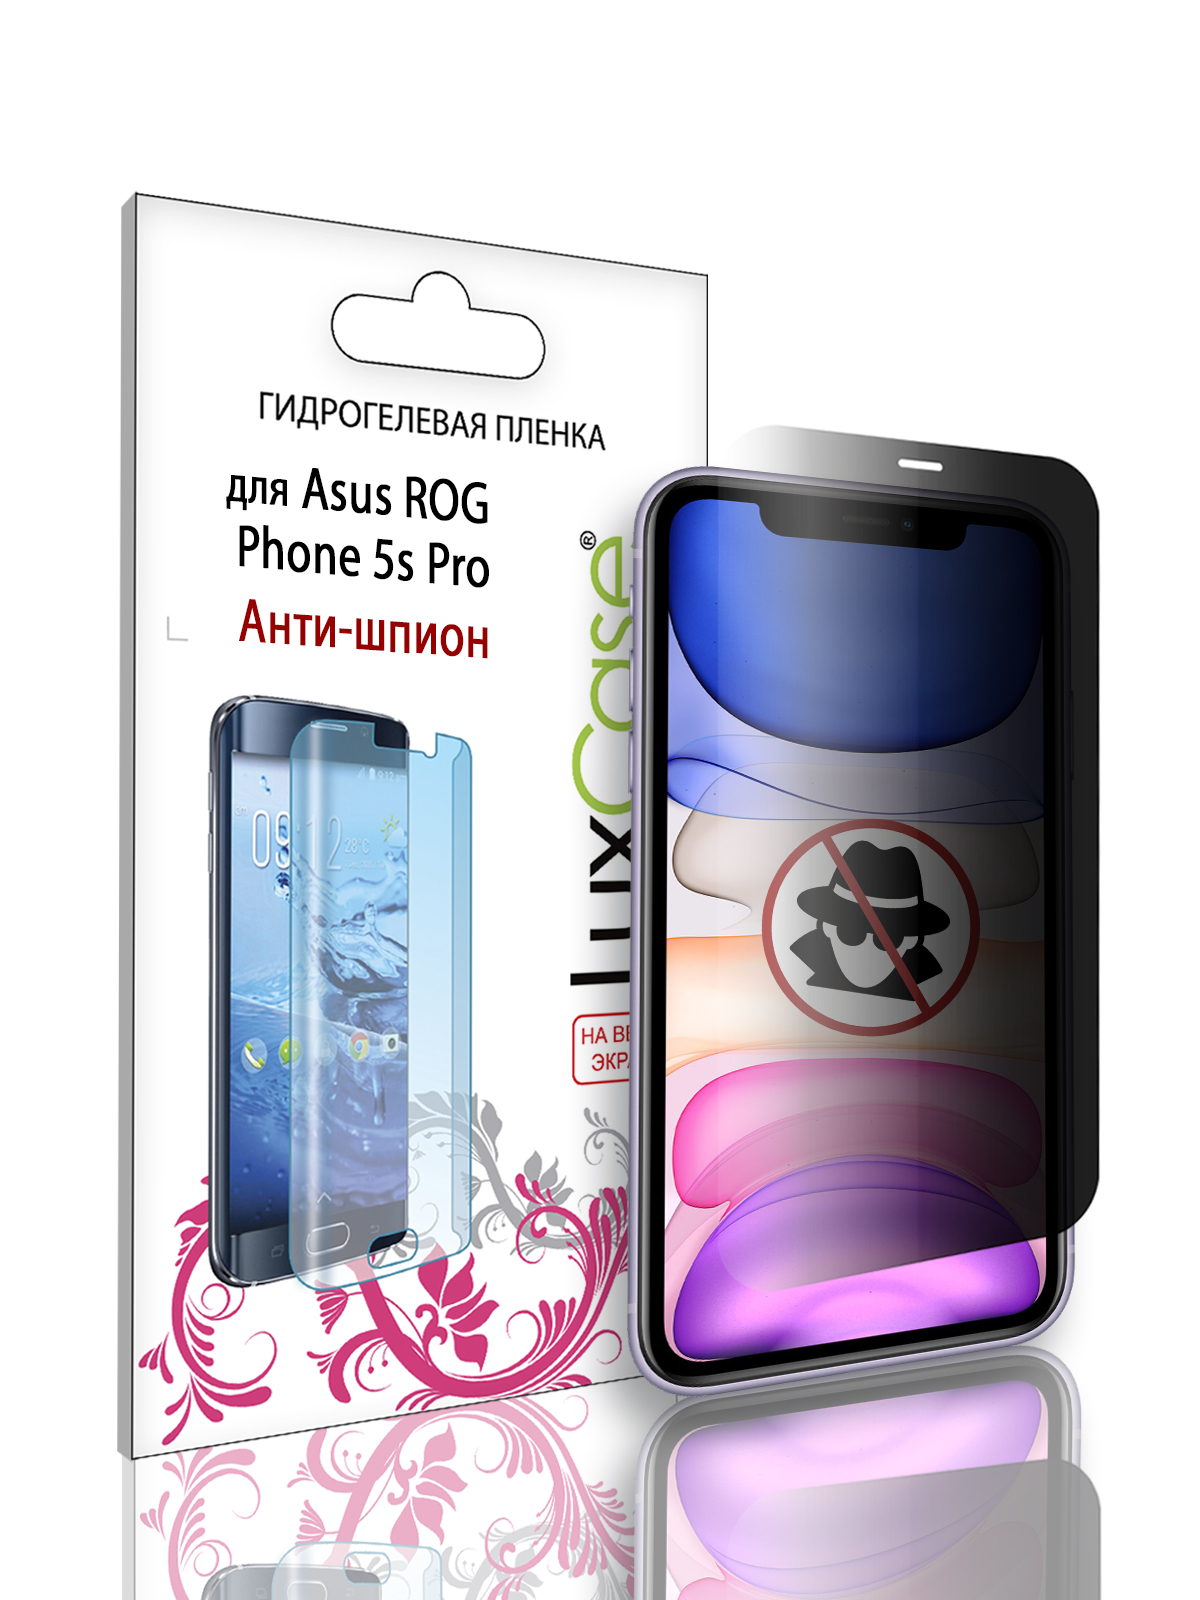 Гидрогелевая пленка LuxCase для Asus ROG Phone 5s Pro, Антишпион, 0,14 мм, Front гидрогелевая защитная пленка антишпион anty spy анти шпион для dexp bl150 матовая